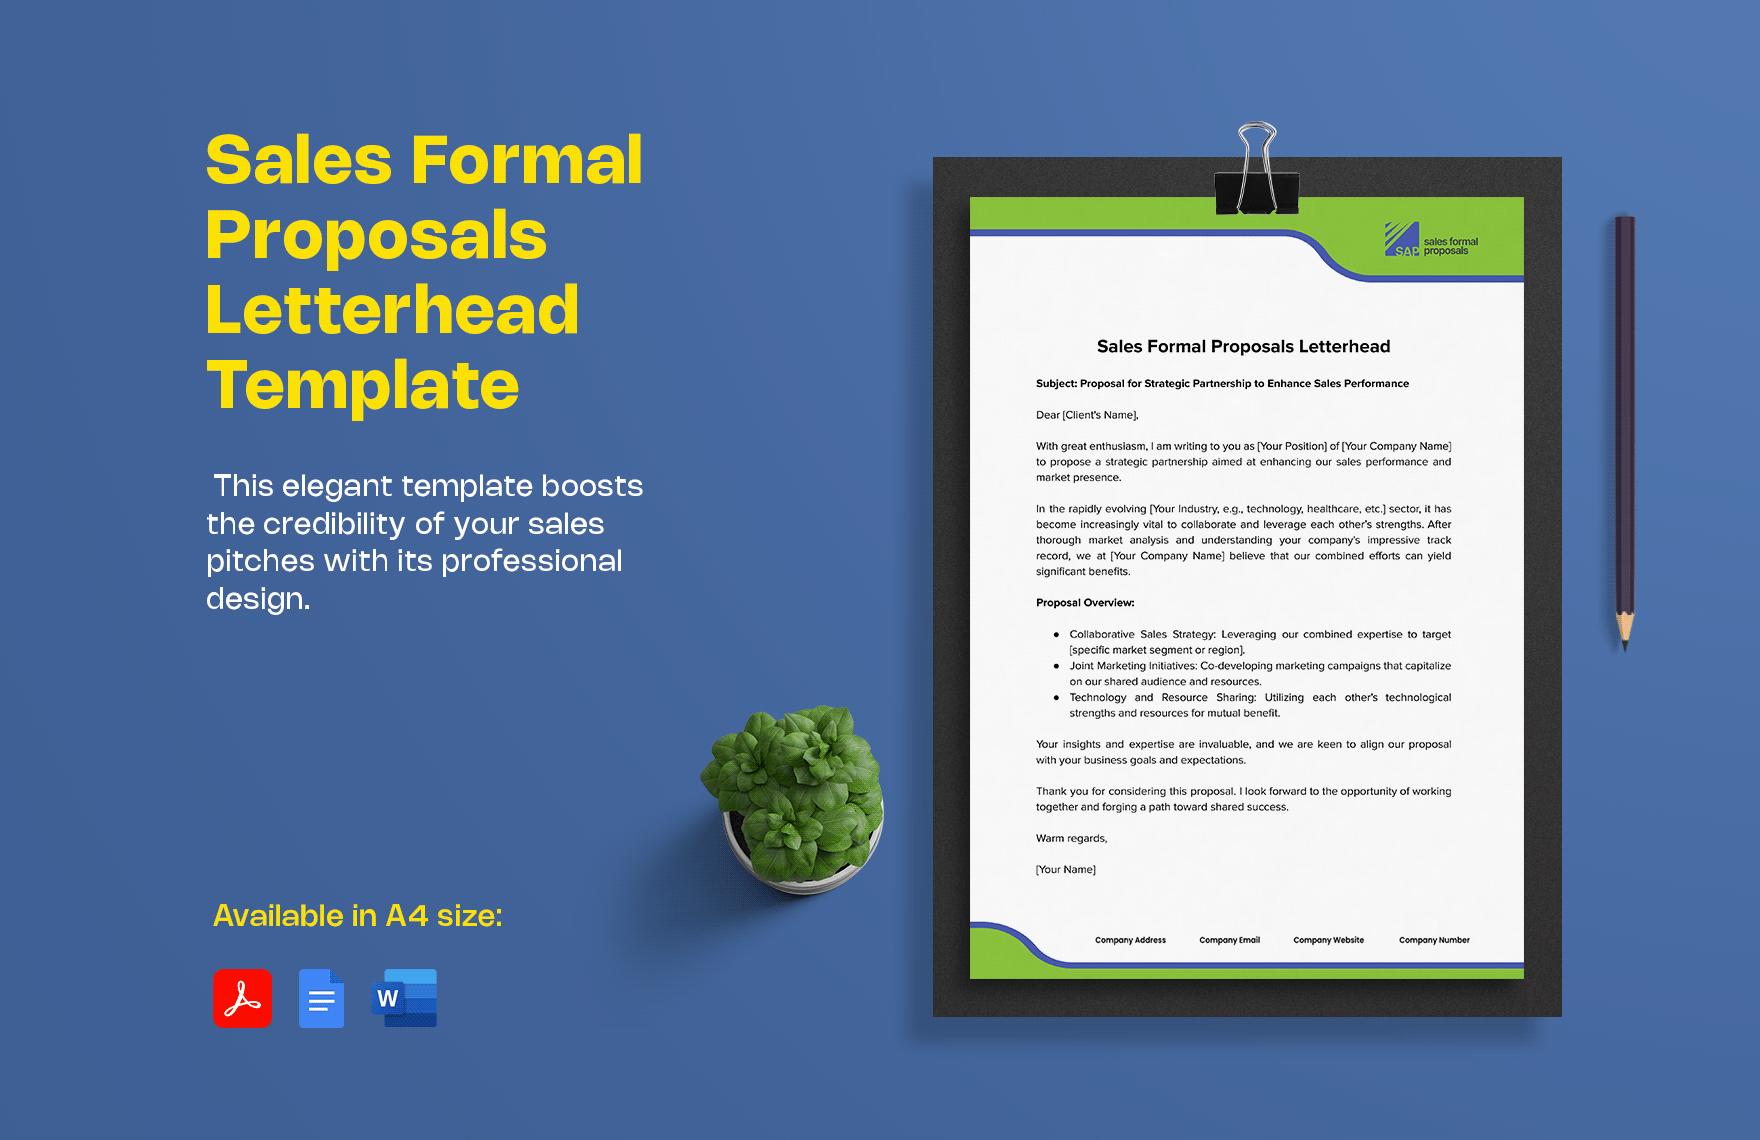 Sales Formal Proposals Letterhead Template